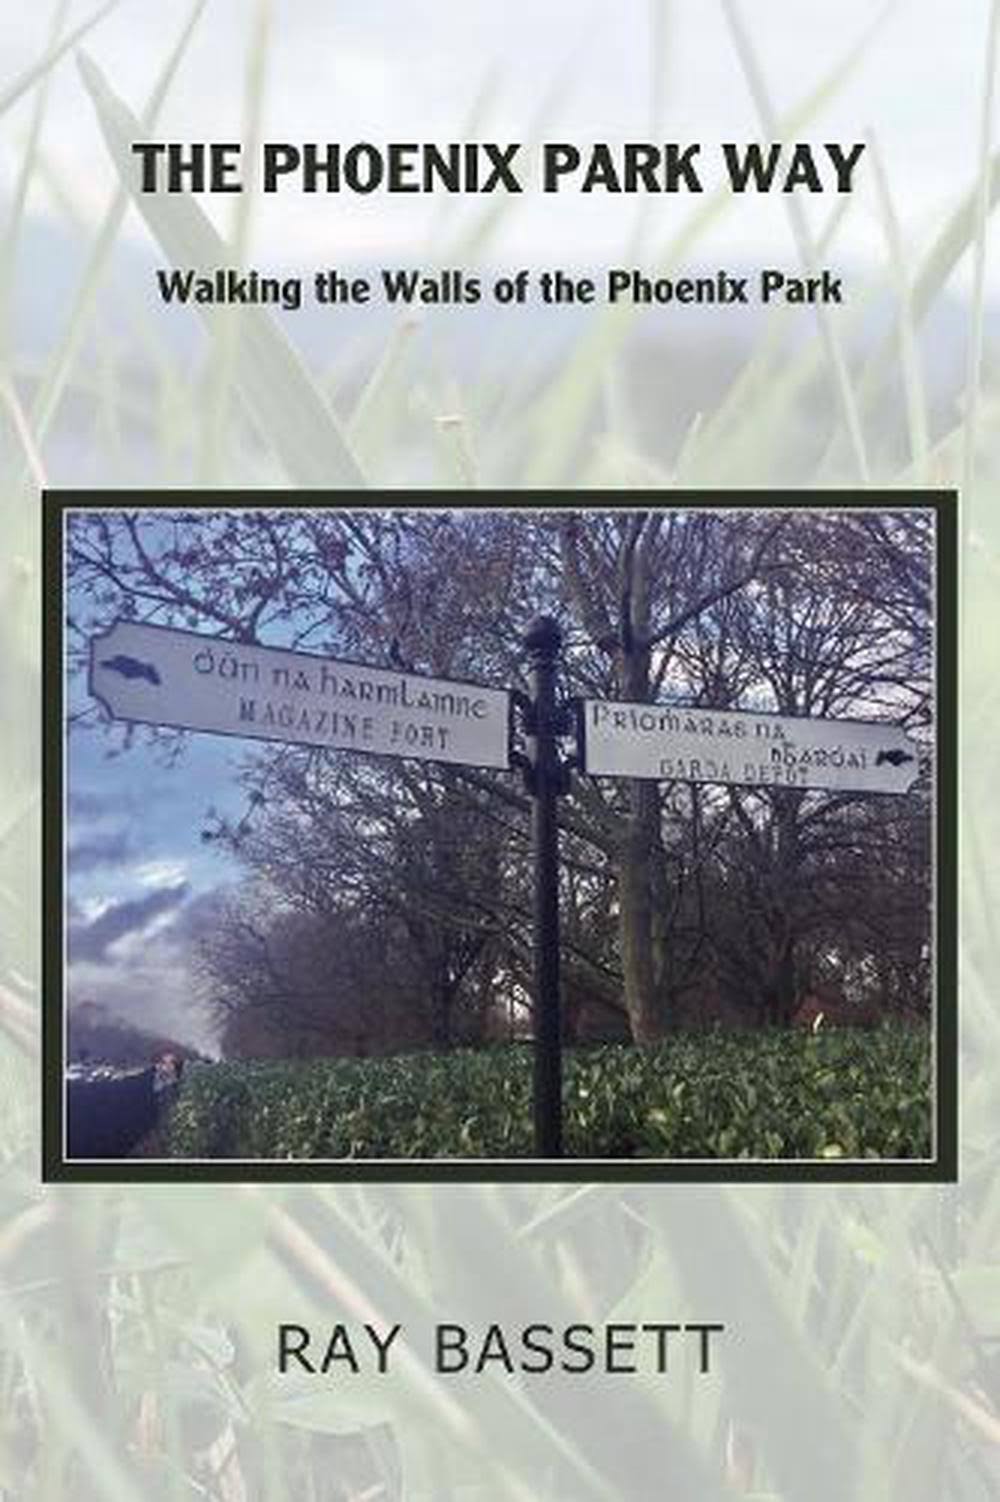 The Phoenix Park Way: Walking the Walls of the Phoenix Park [Book]